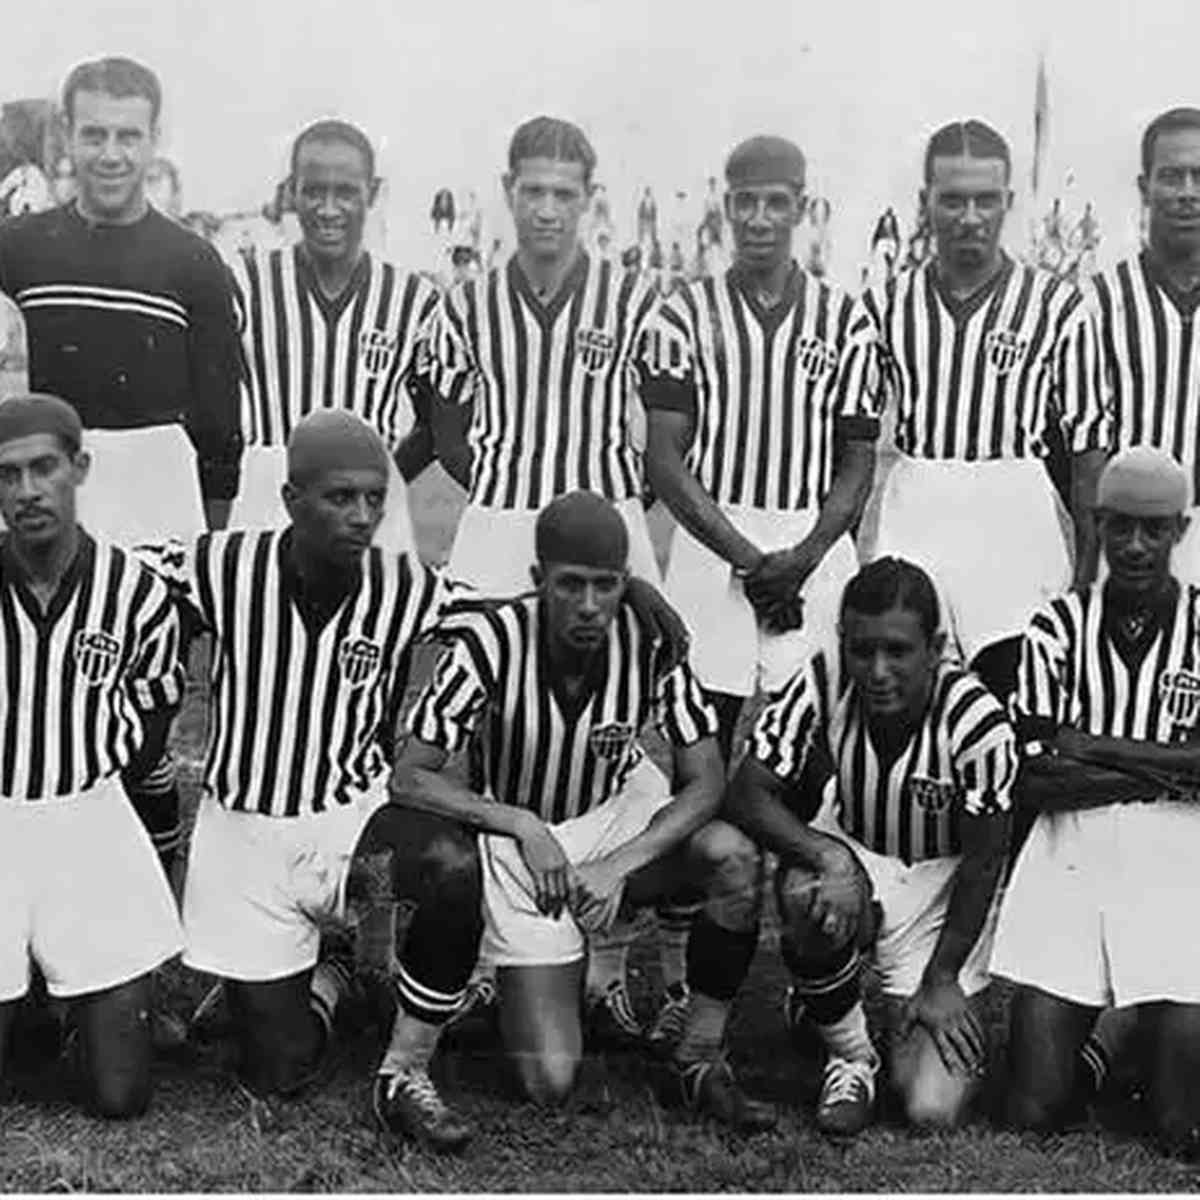 Tabela do primeiro Campeonato Brasileiro (1937) : r/futebol